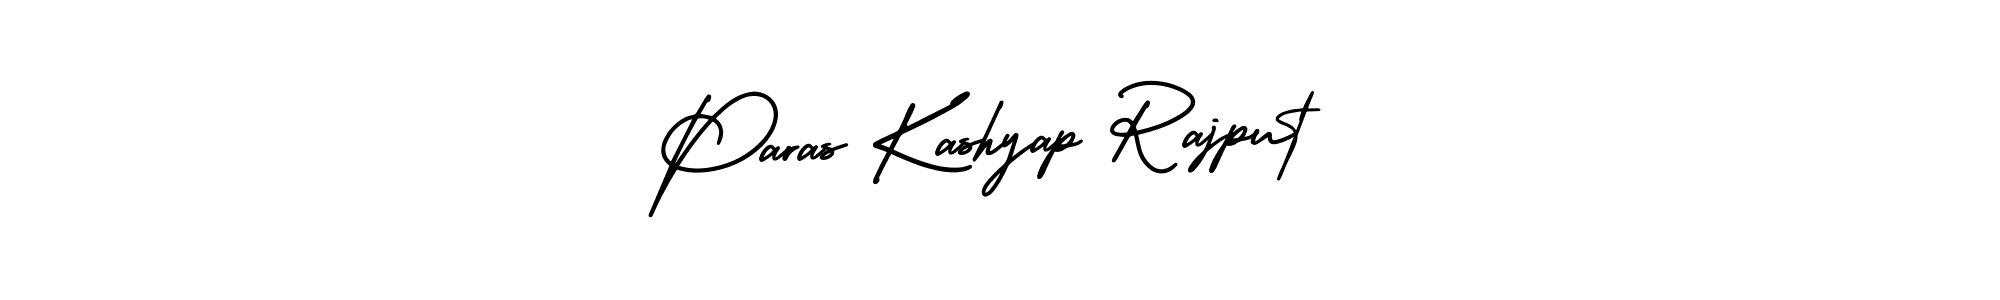 Best and Professional Signature Style for Paras Kashyap Rajput. AmerikaSignatureDemo-Regular Best Signature Style Collection. Paras Kashyap Rajput signature style 3 images and pictures png